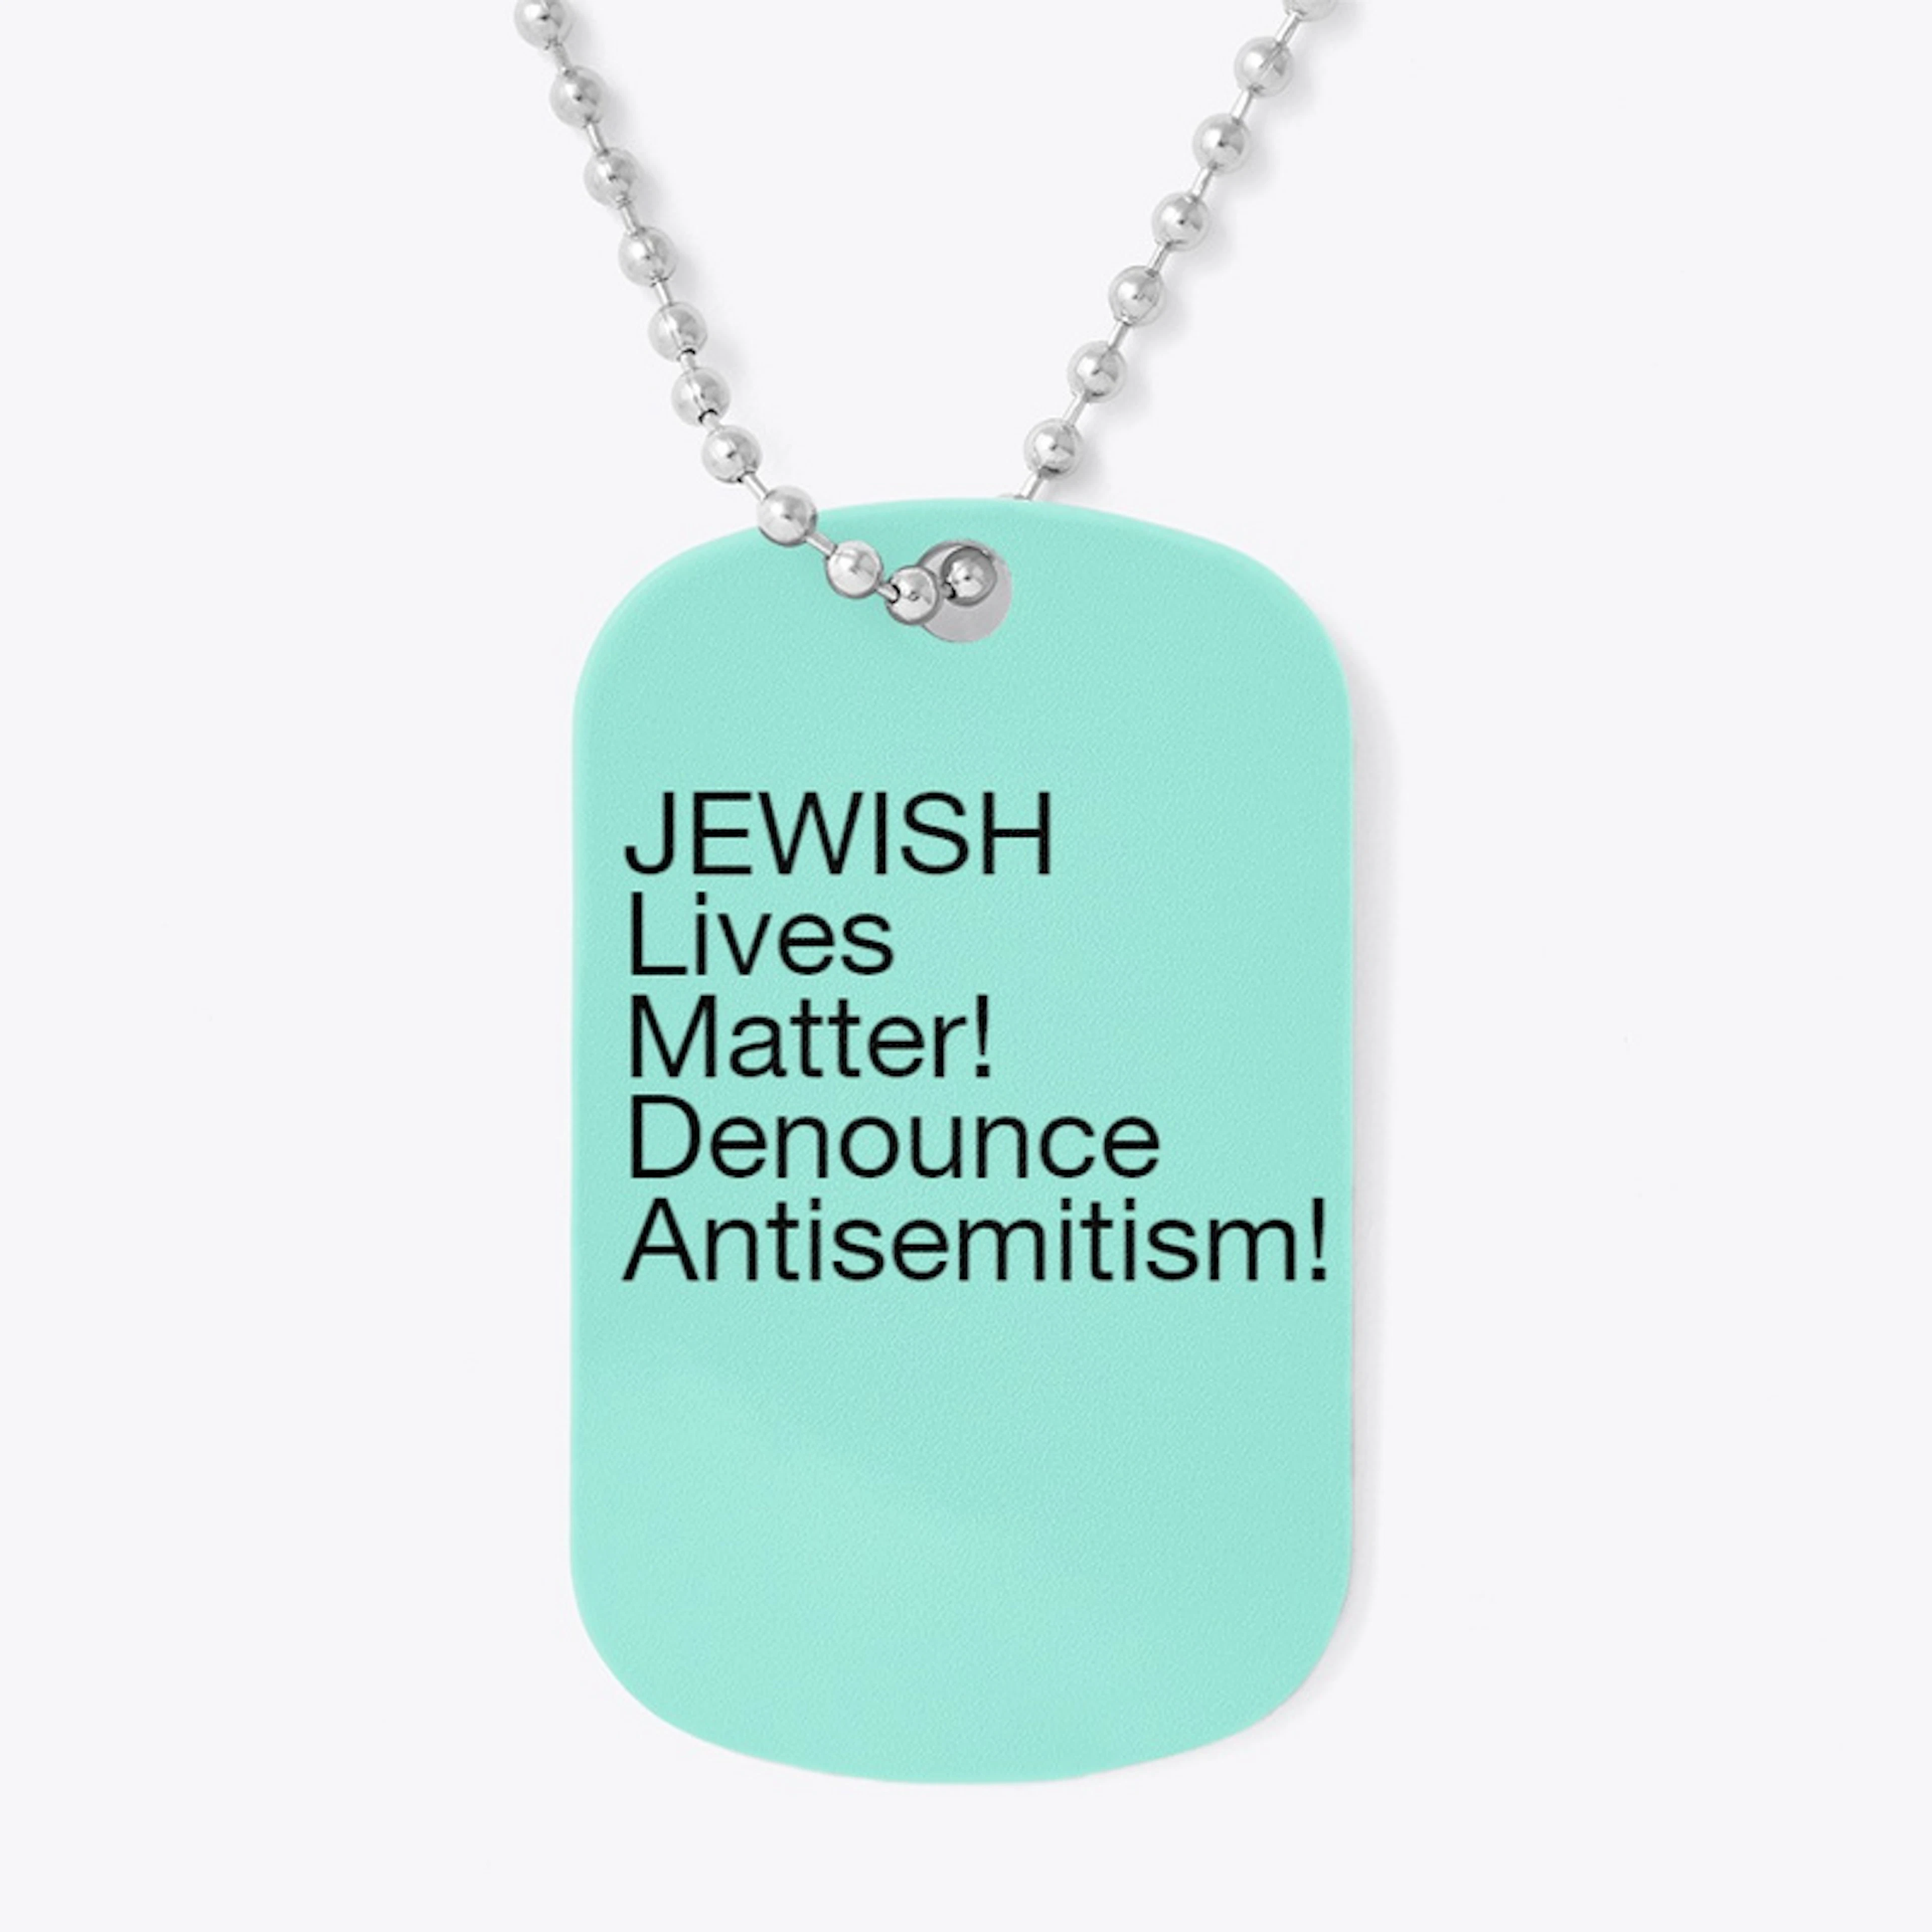 JLM Denounce Antisemitisn